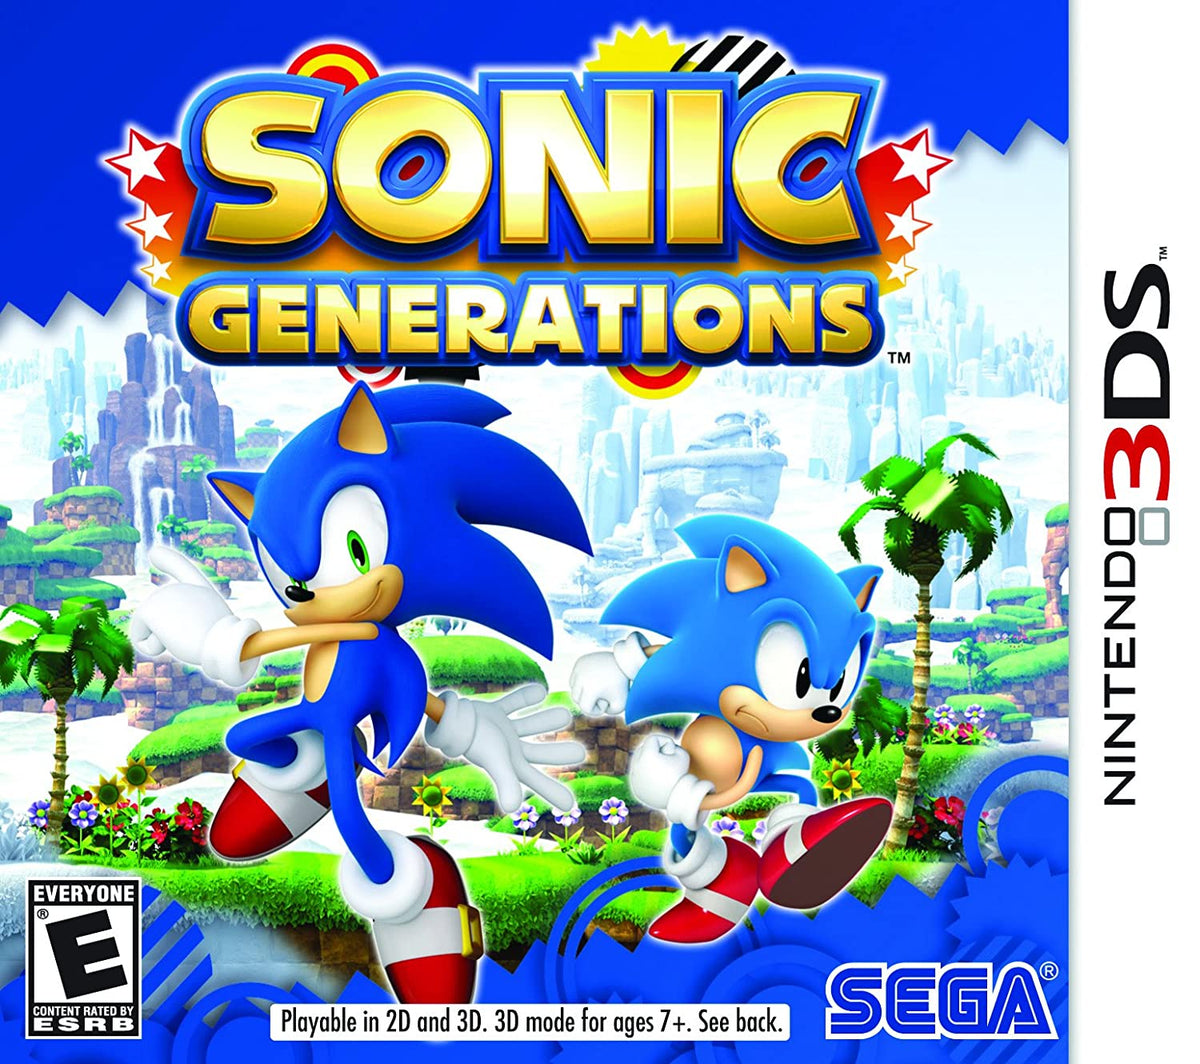 Sonic Generations (Platinum Hits) - Xbox 360 Standard 